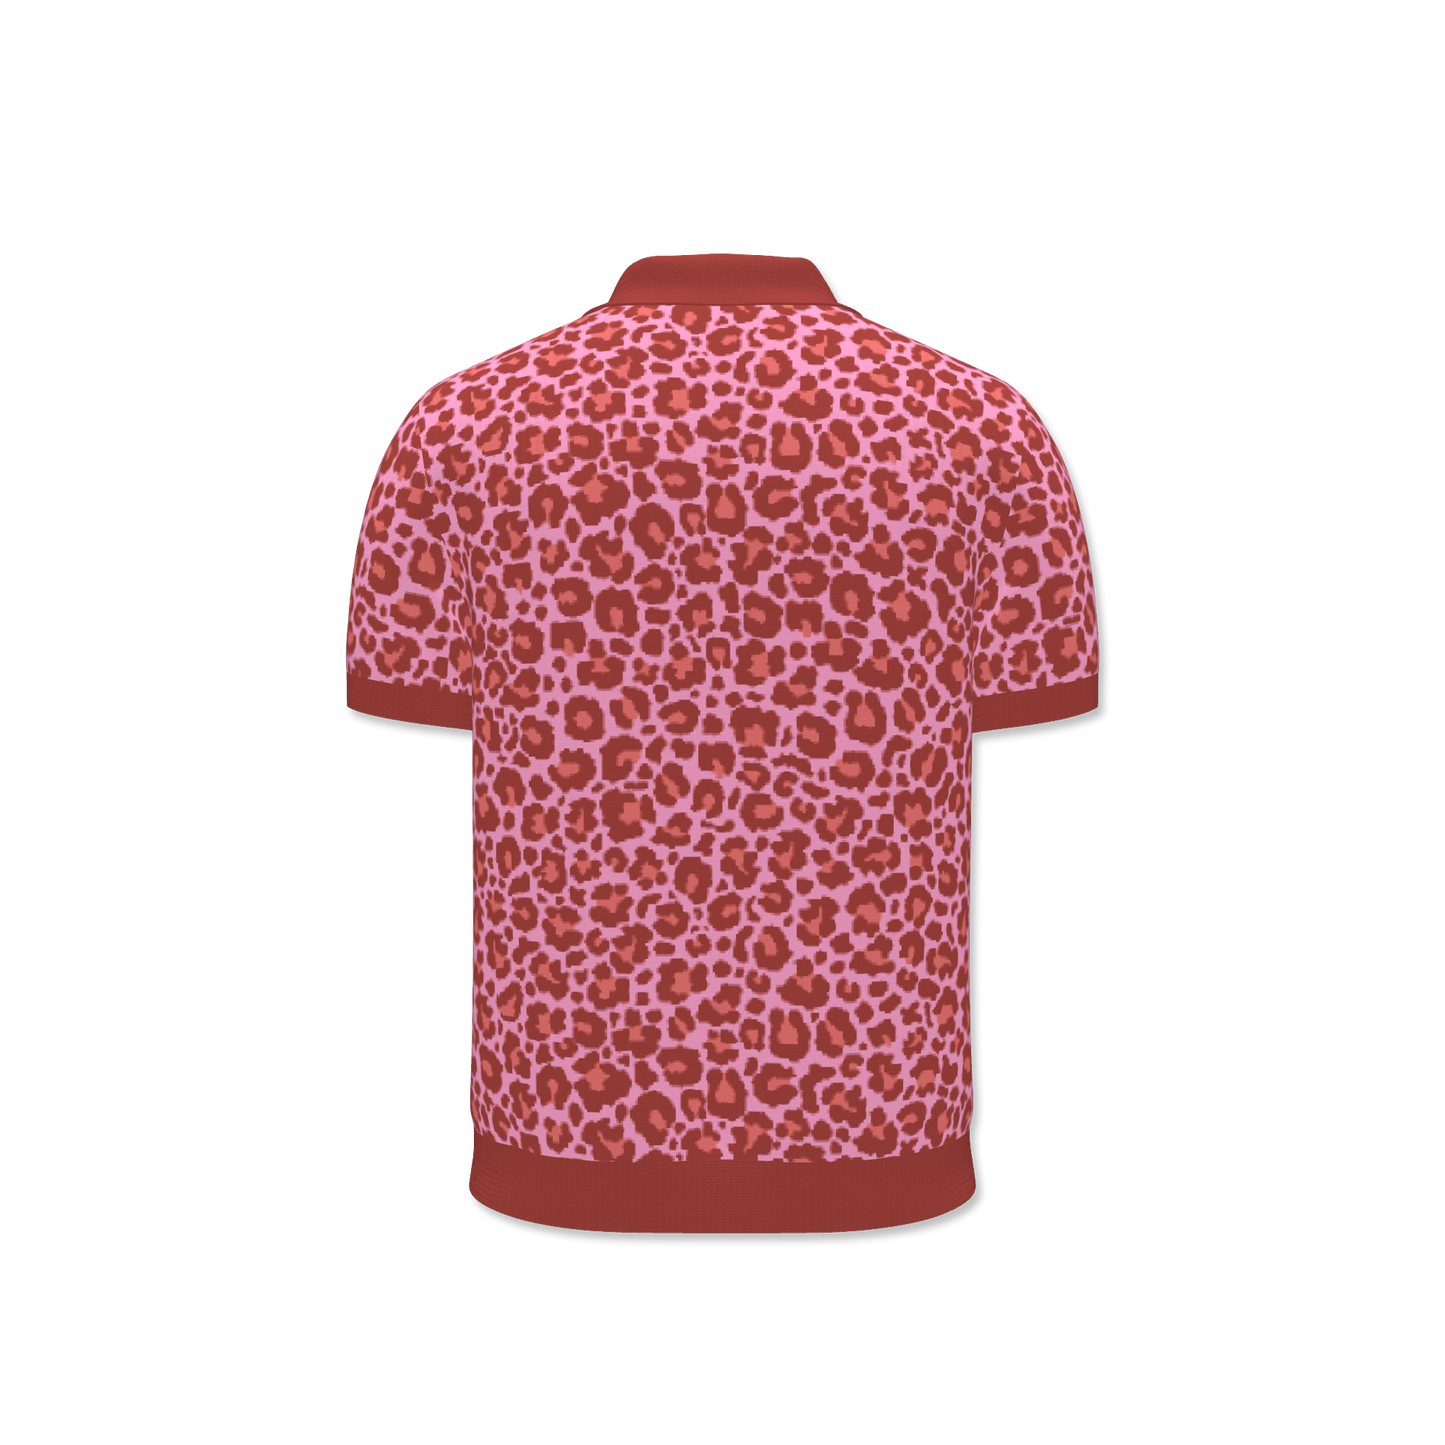 Leopard Lounge Valentine Mens V-Neck Polo Shirt by Studio Ten Design